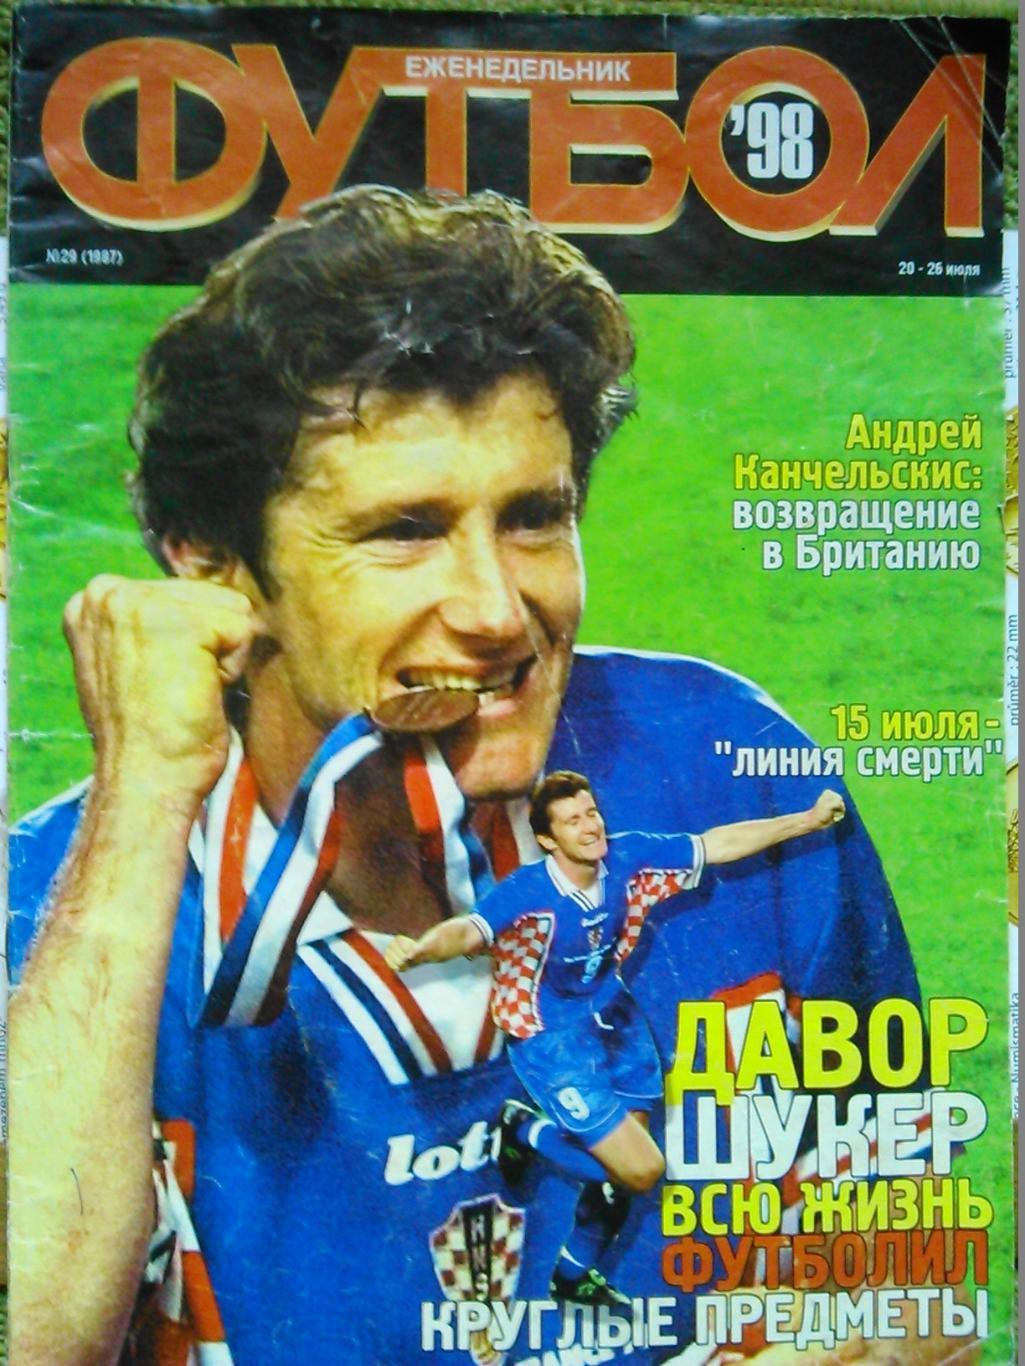 ФУТБОЛ (UA) №29 (1987). 1998. Постер: ФРАНЦИЯ-Чемпион мира. Оптом скидки до 47%!